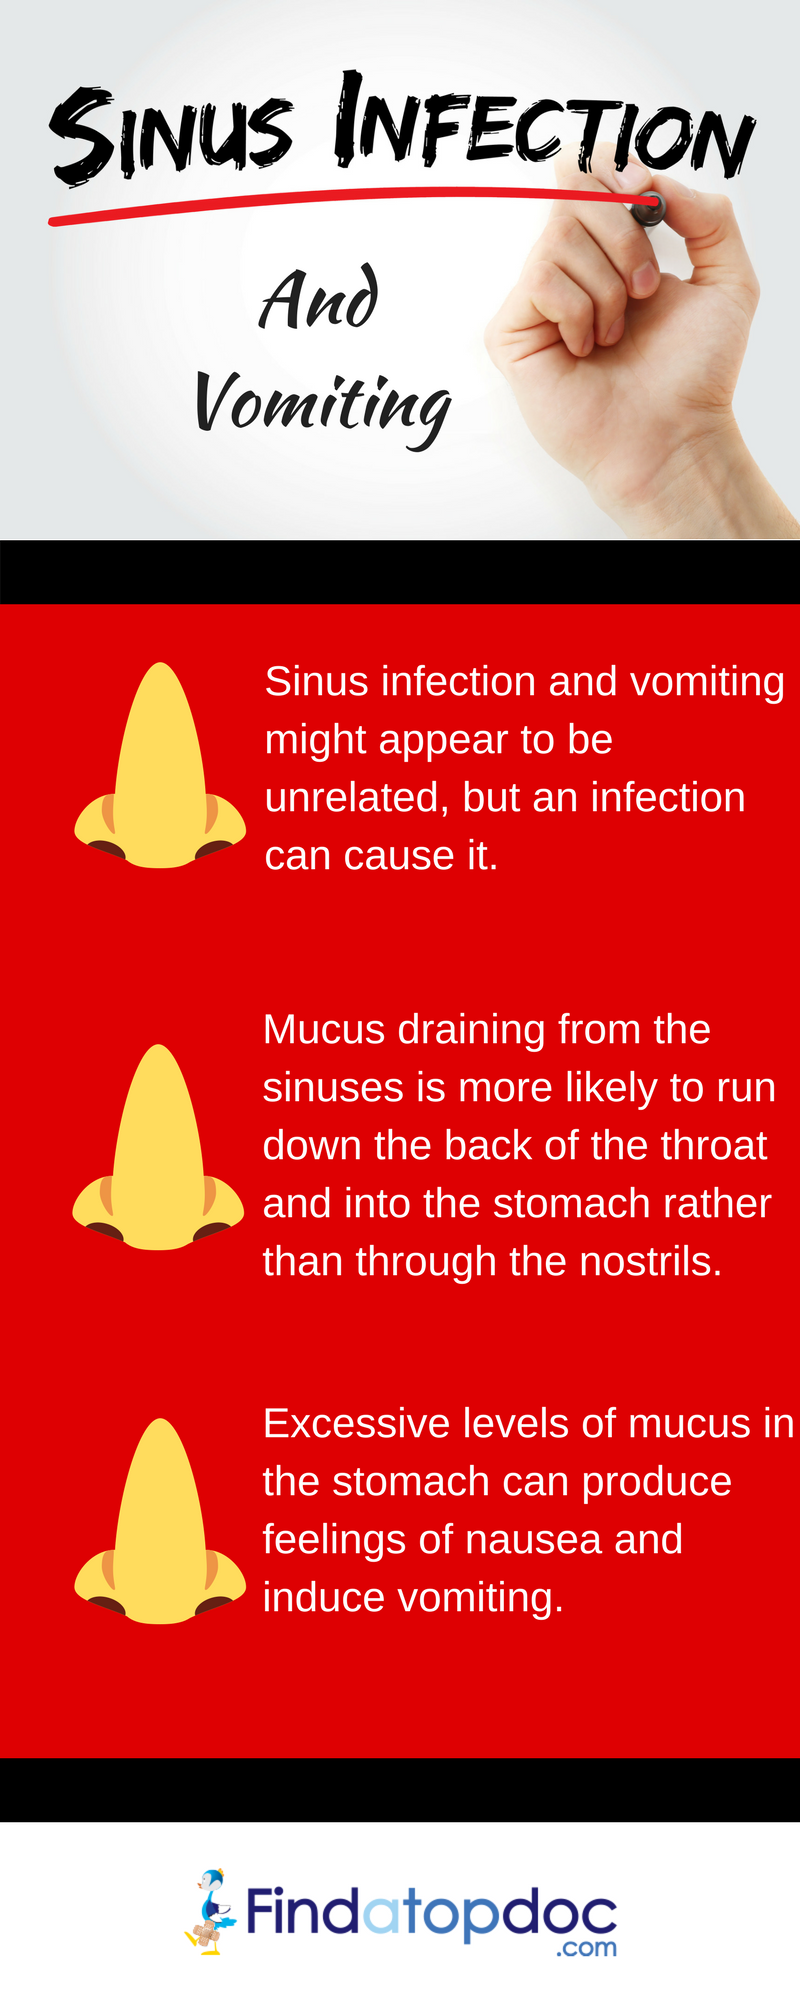 Can Sinusitis Cause Vomiting